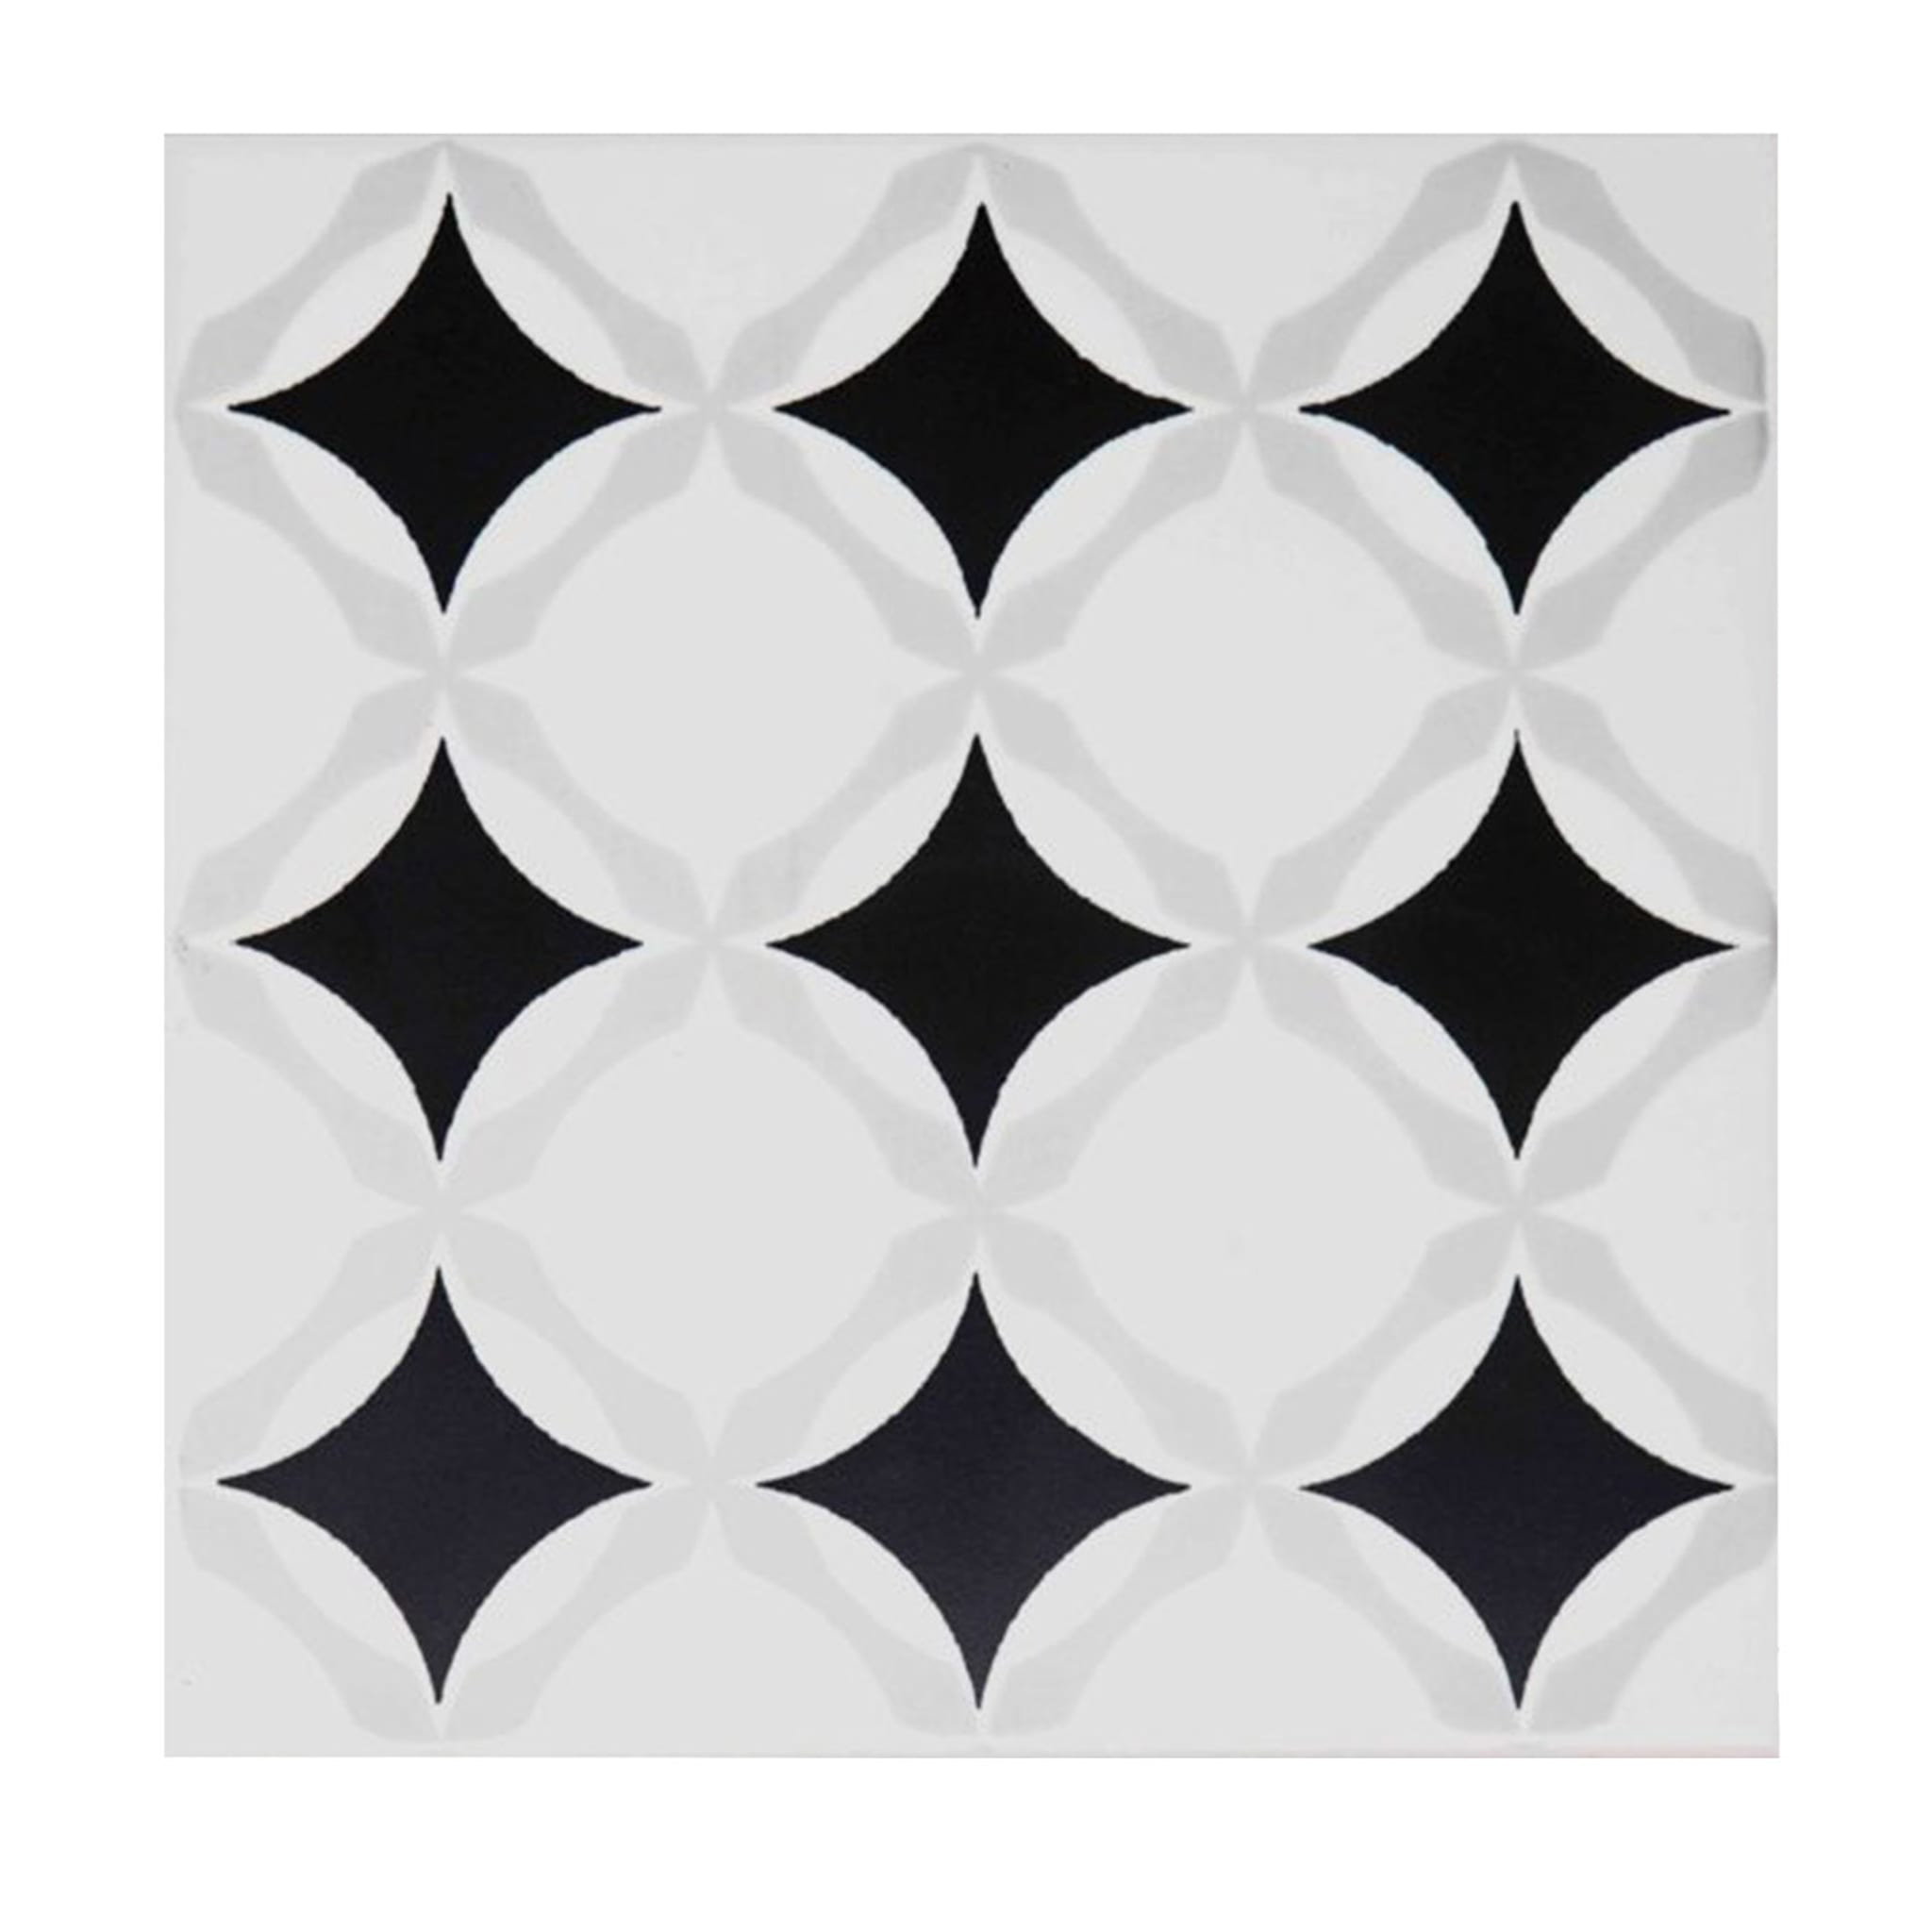 Geometric Trend C44 #7 Black & White Set of 25 Square Tiles - Main view